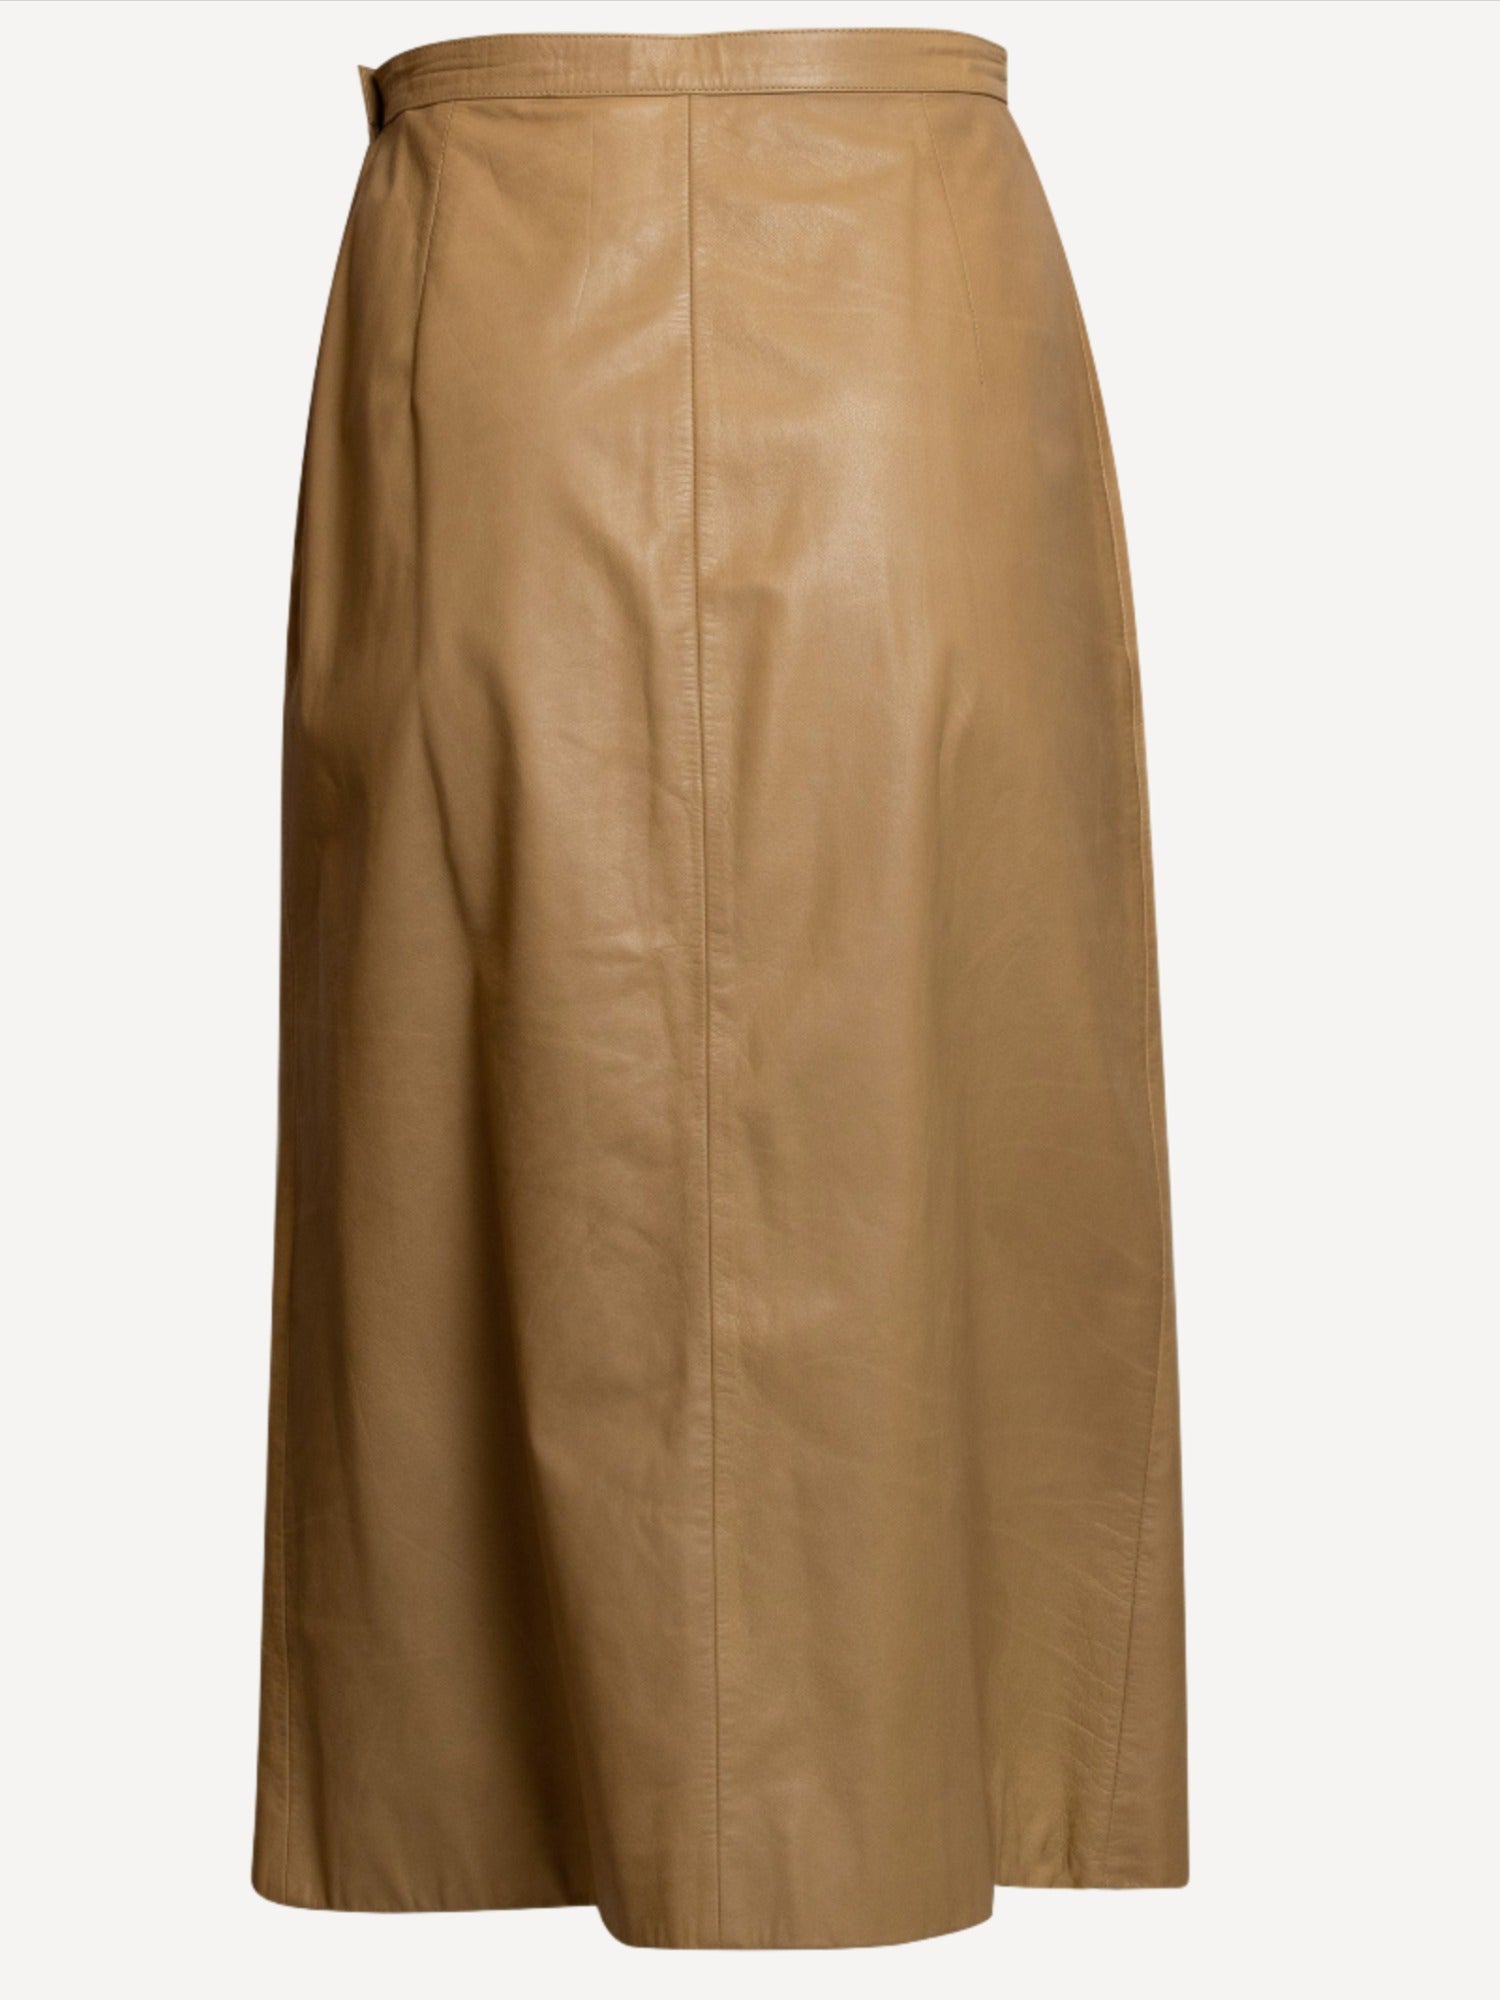 Gucci Leather Skirt Suit Set